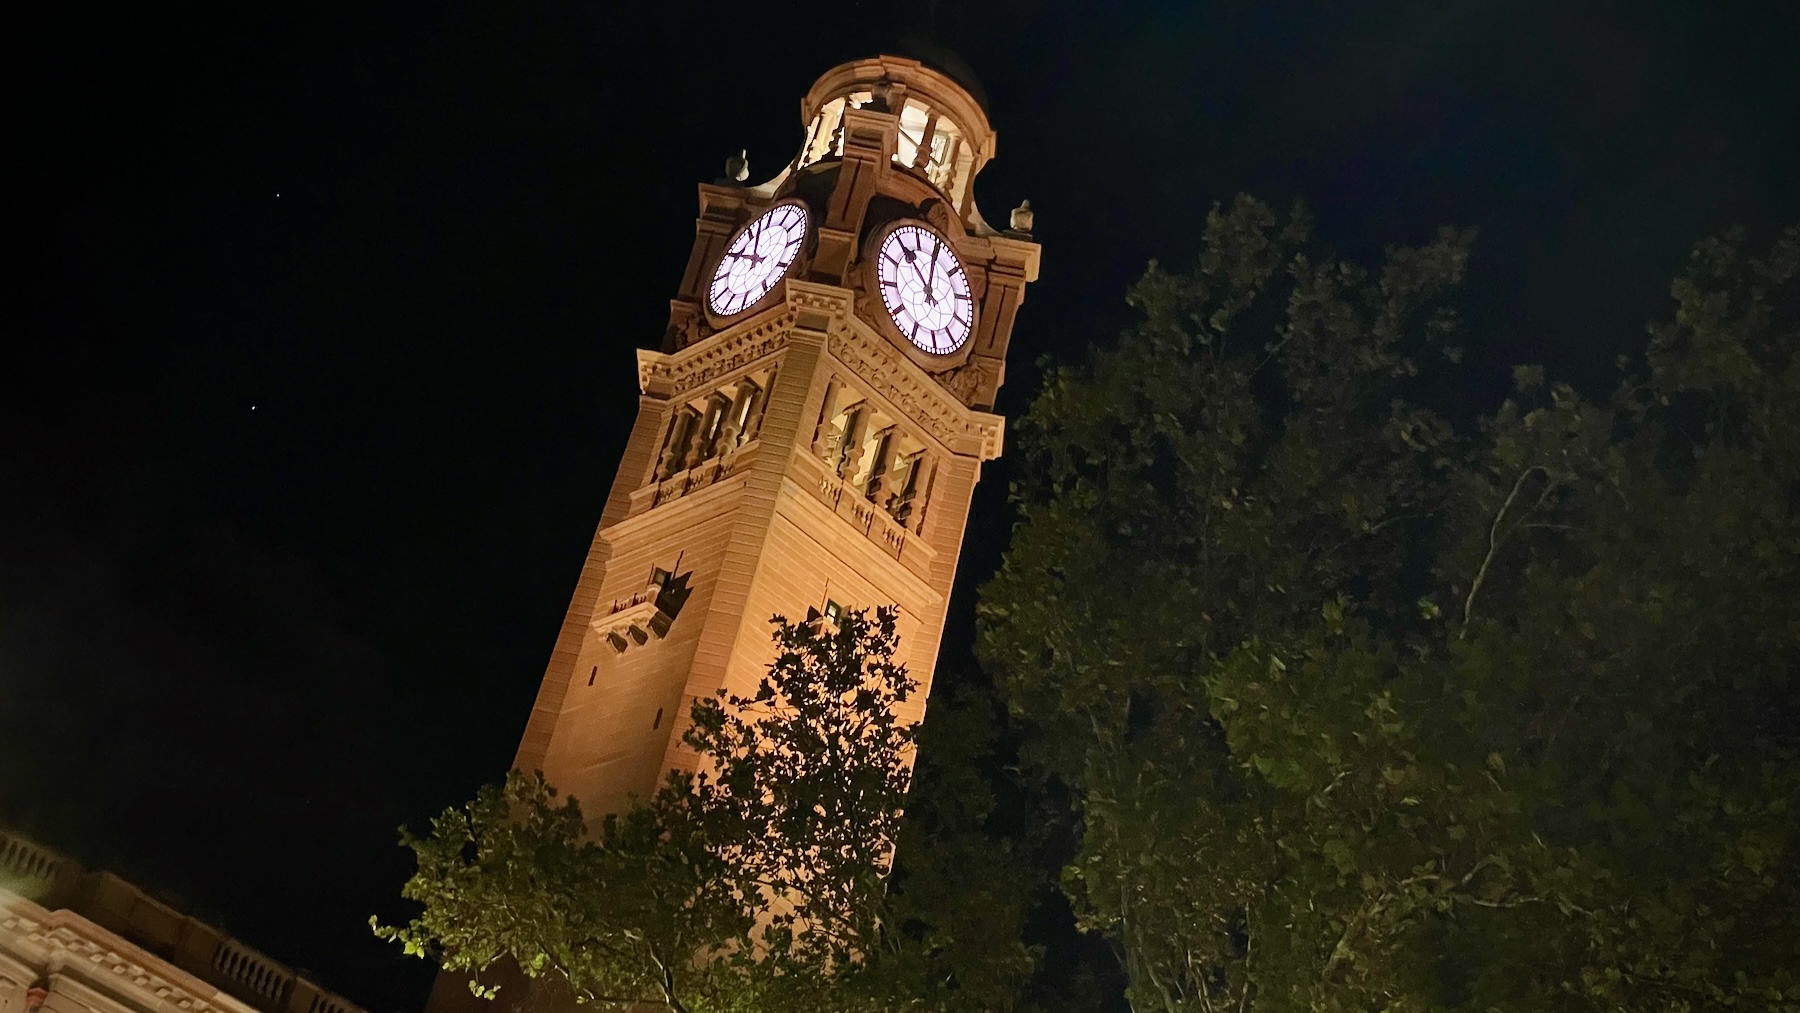 Sydney Central clock tower